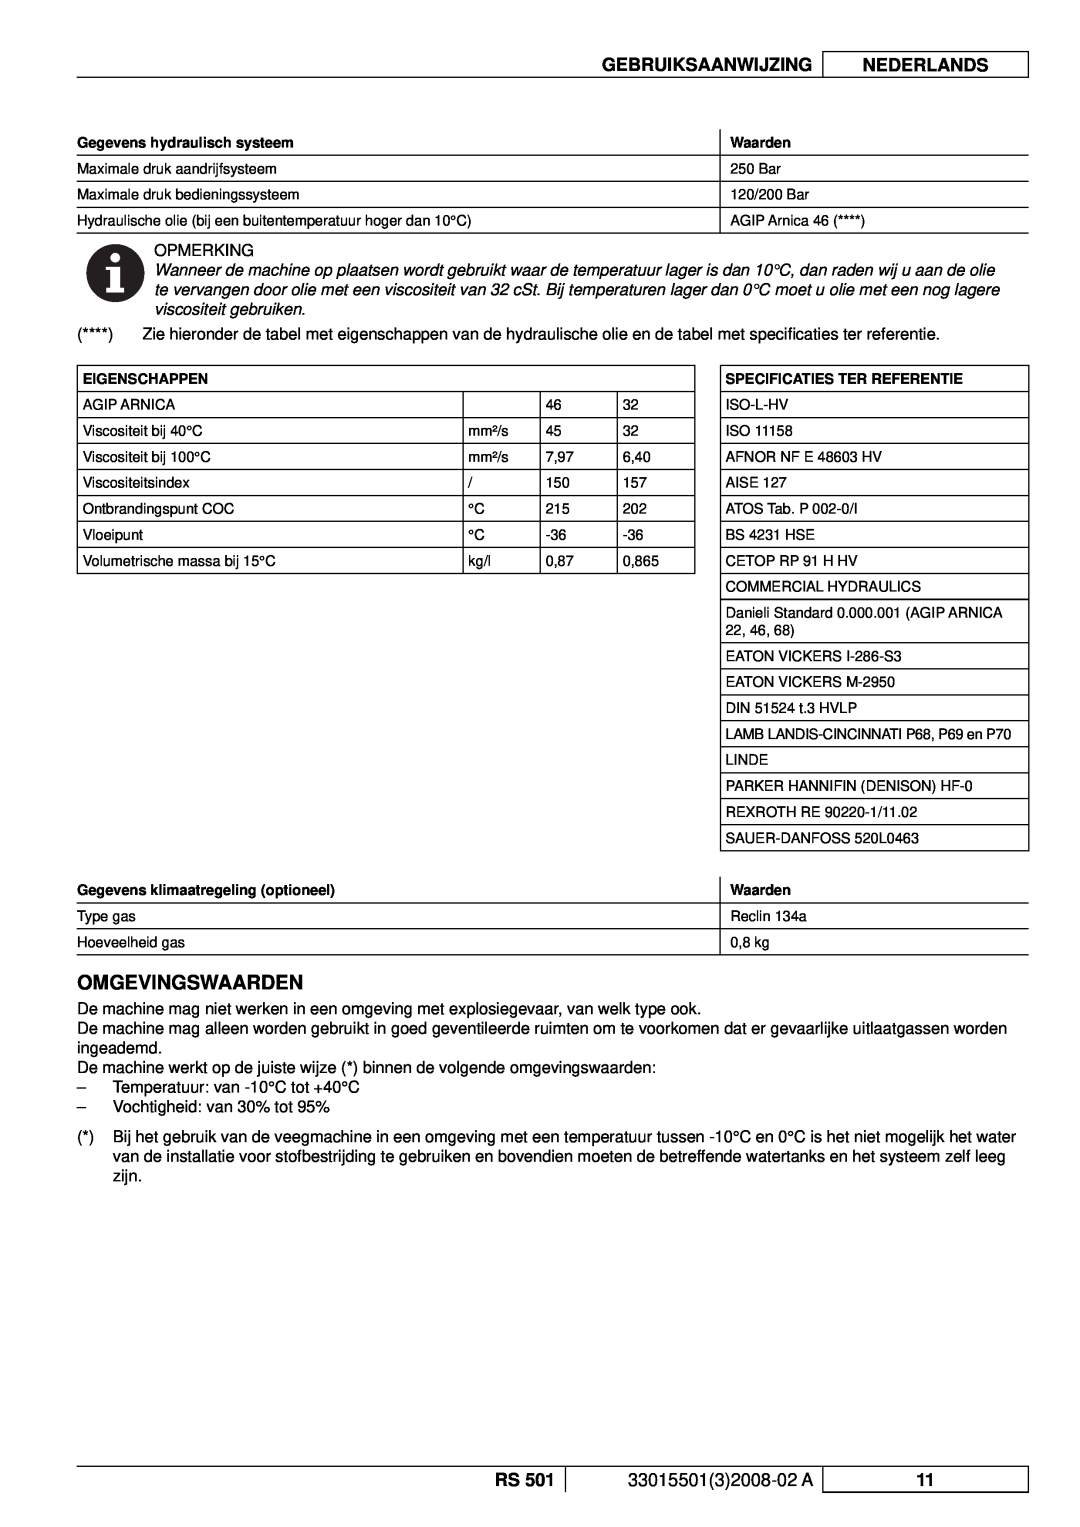 Nilfisk-ALTO RS 501 manuel dutilisation Omgevingswaarden, Gebruiksaanwijzing, Nederlands, 3301550132008-02A 